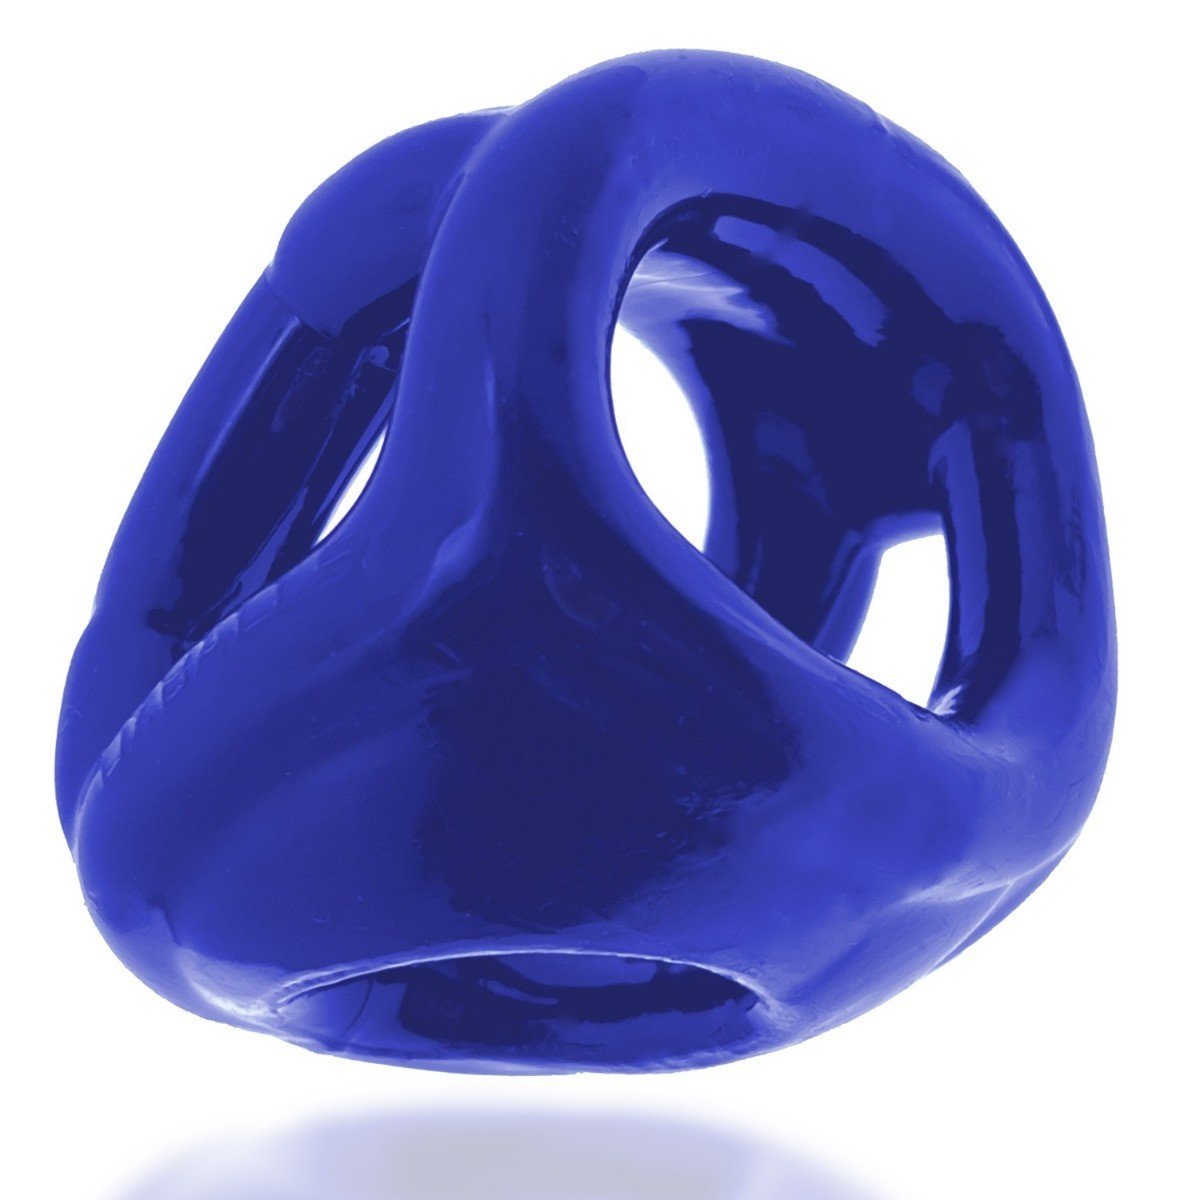 Erekční kroužek a natahovač varlat Oxballs Cocksling Air modrý, elastický erekční kroužek na penis a varlata